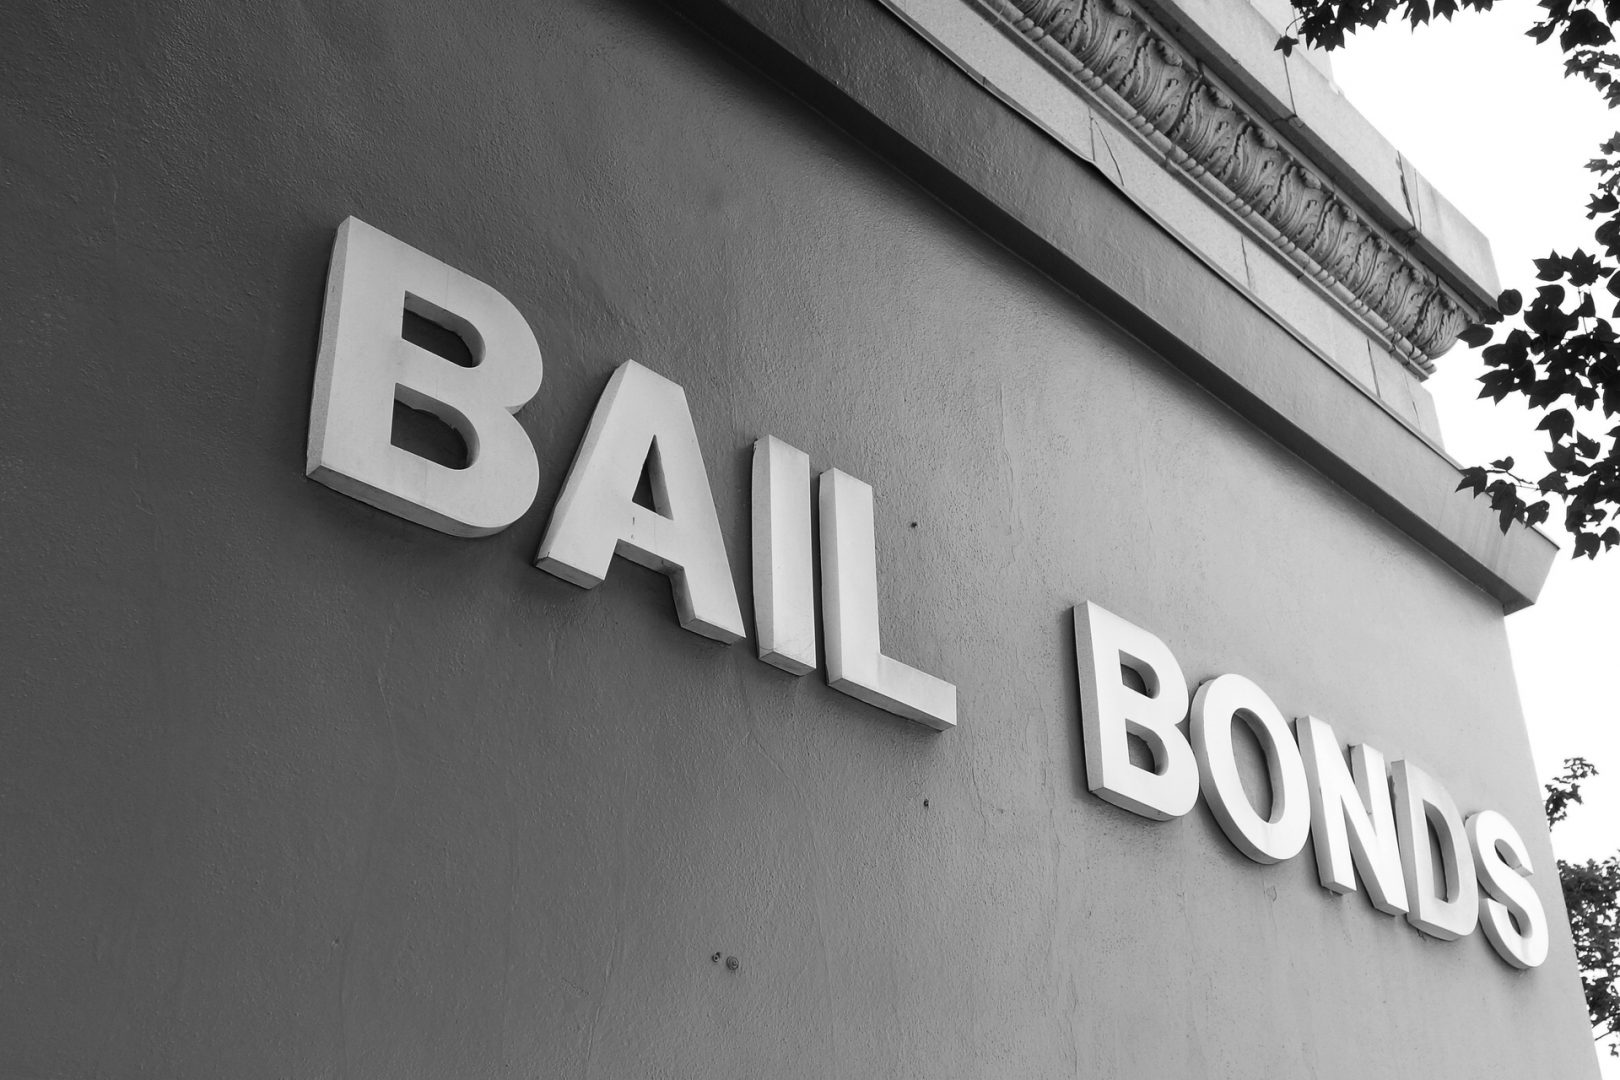 Bail Bonds Store Front Sign